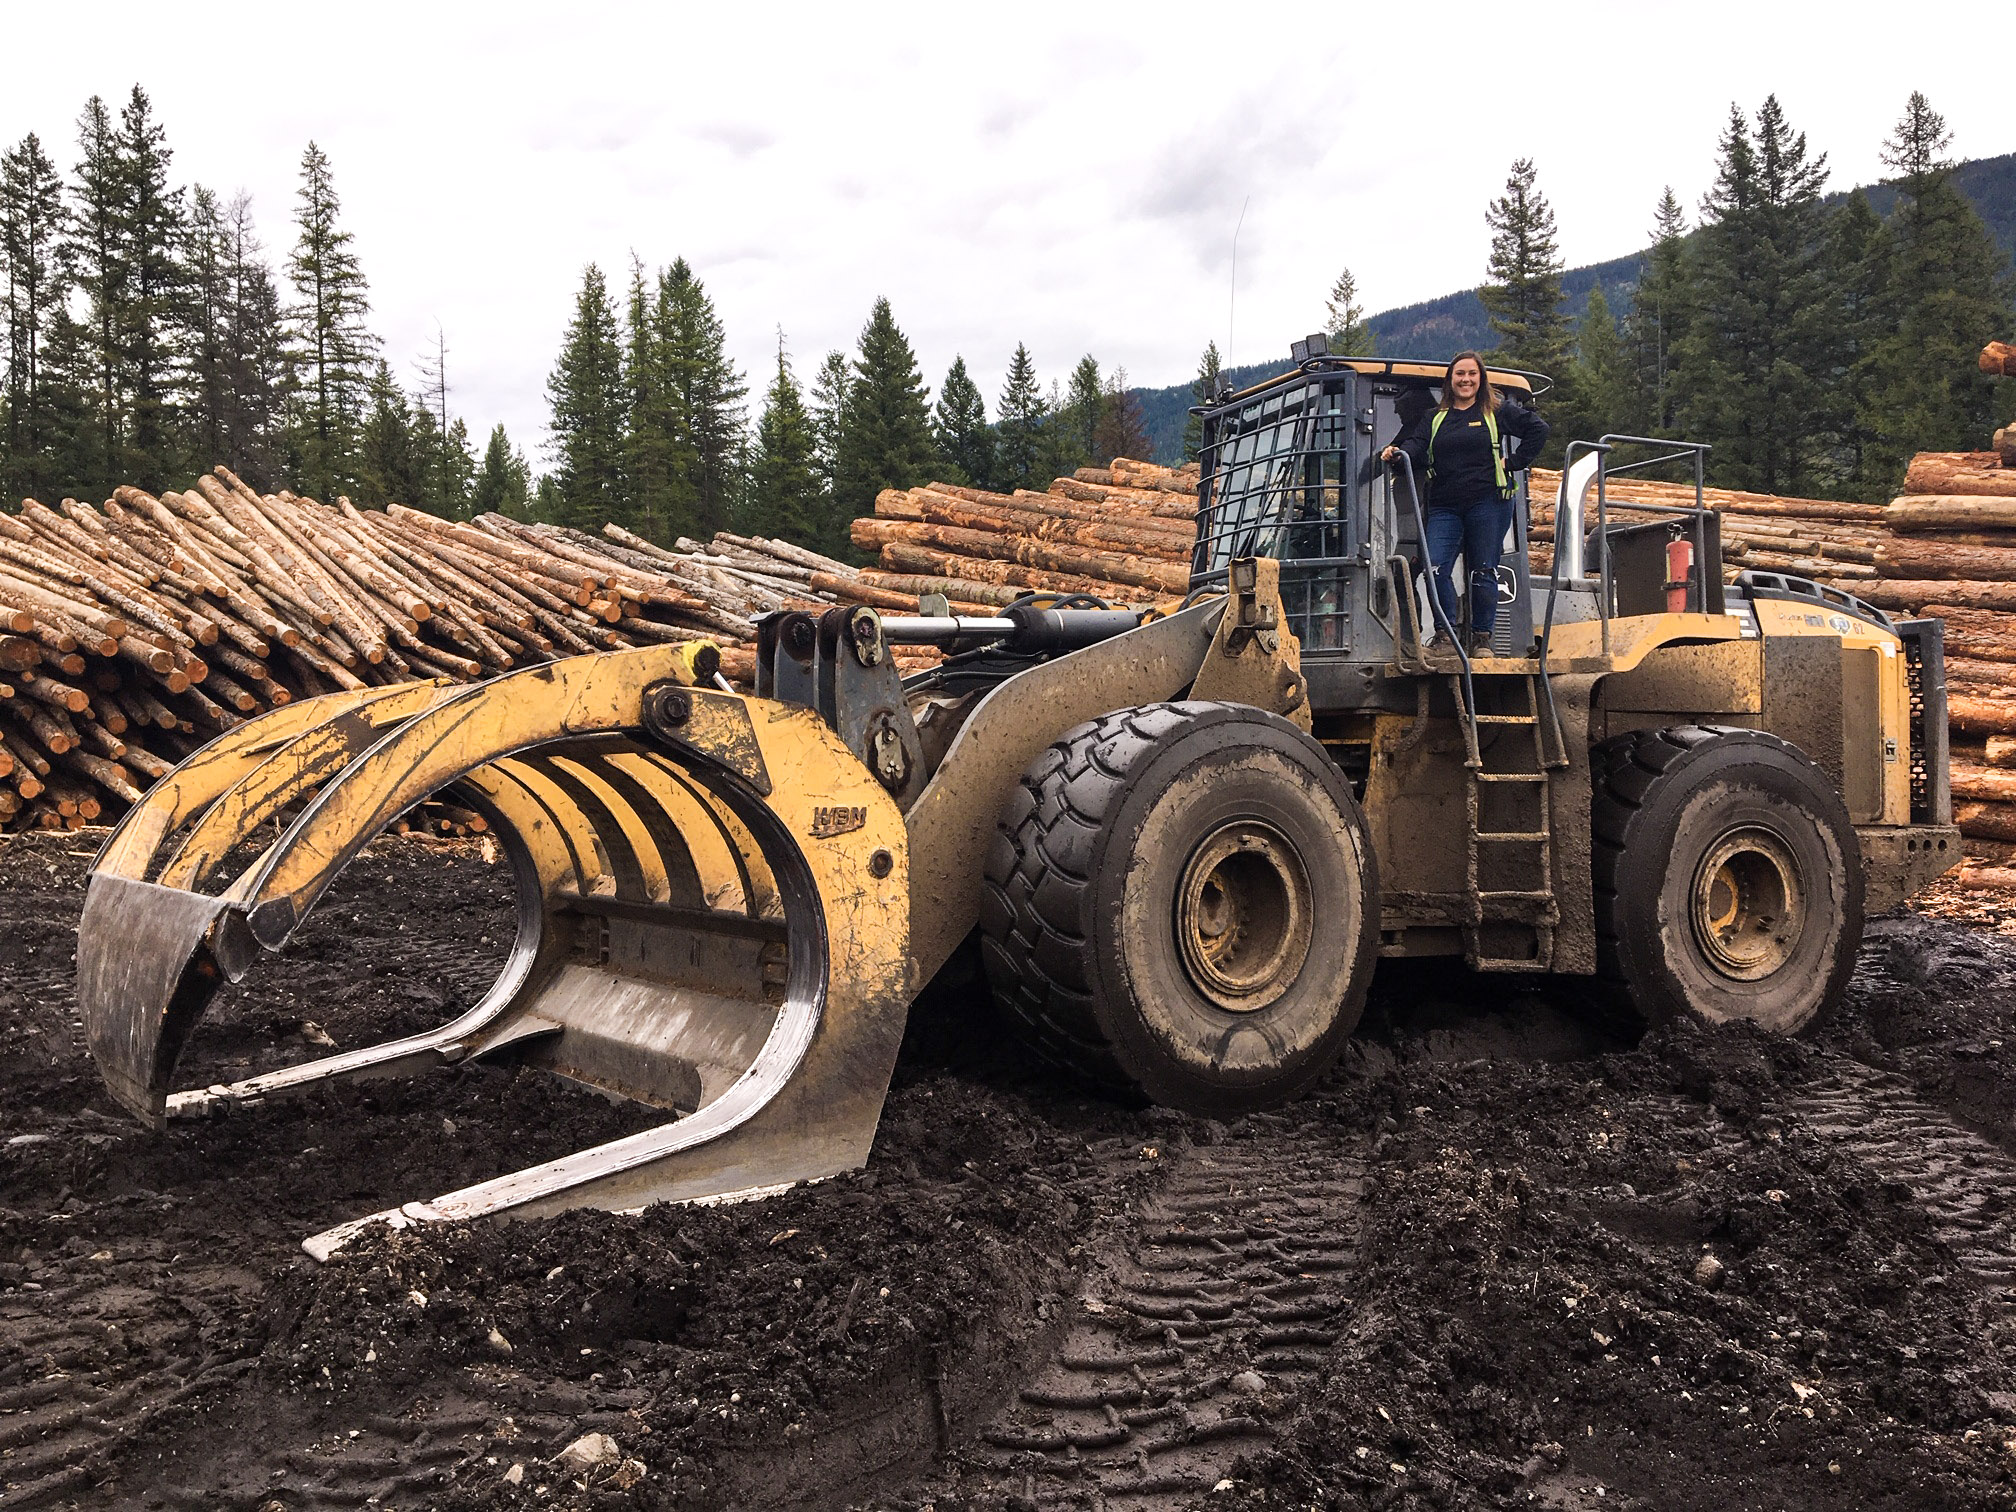 Kalesnikoff Lumber and Mass Timber facility employee action shot at the sawmill